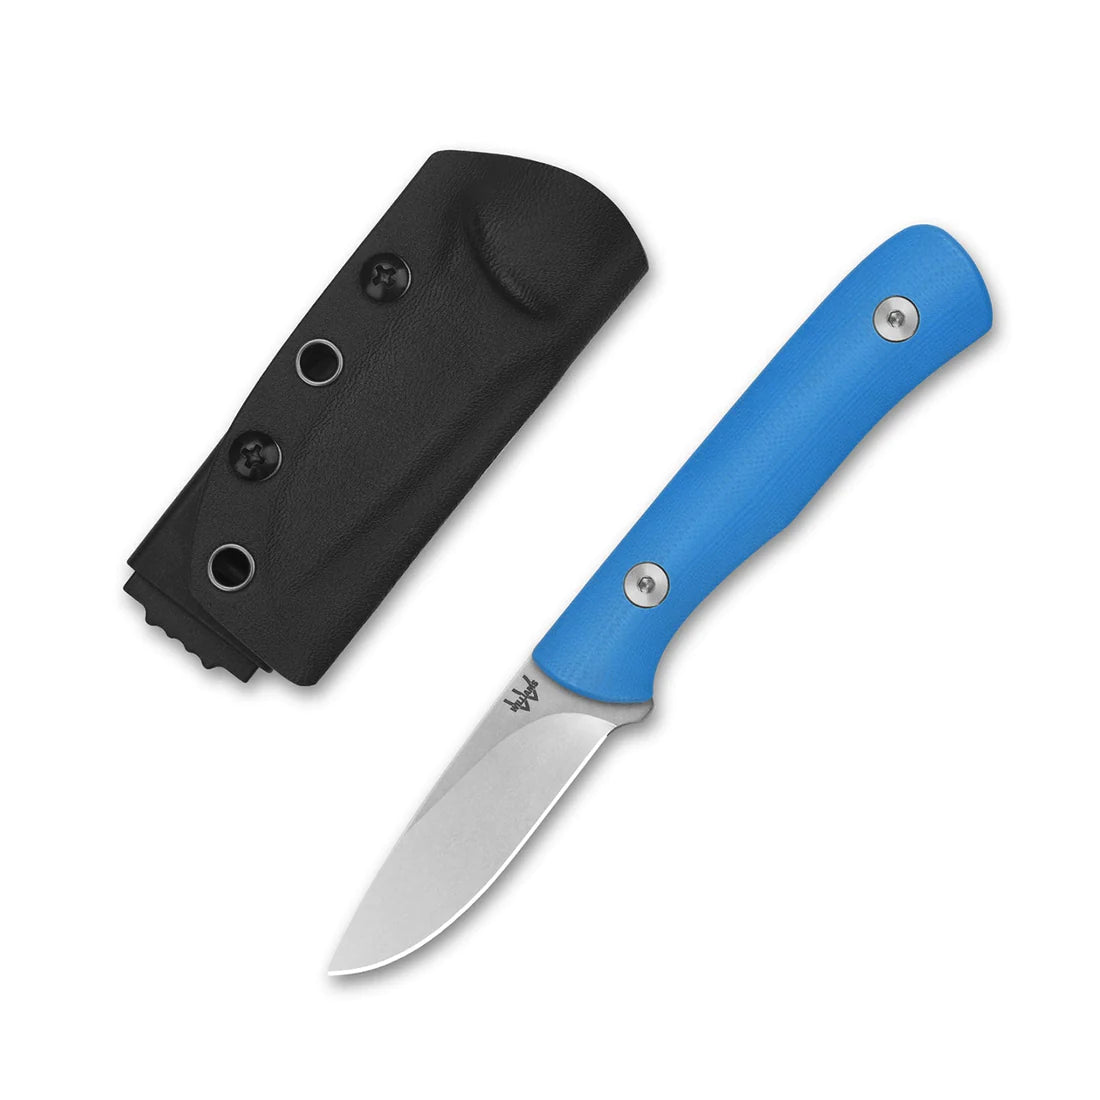 Williams Bird Knife Blue